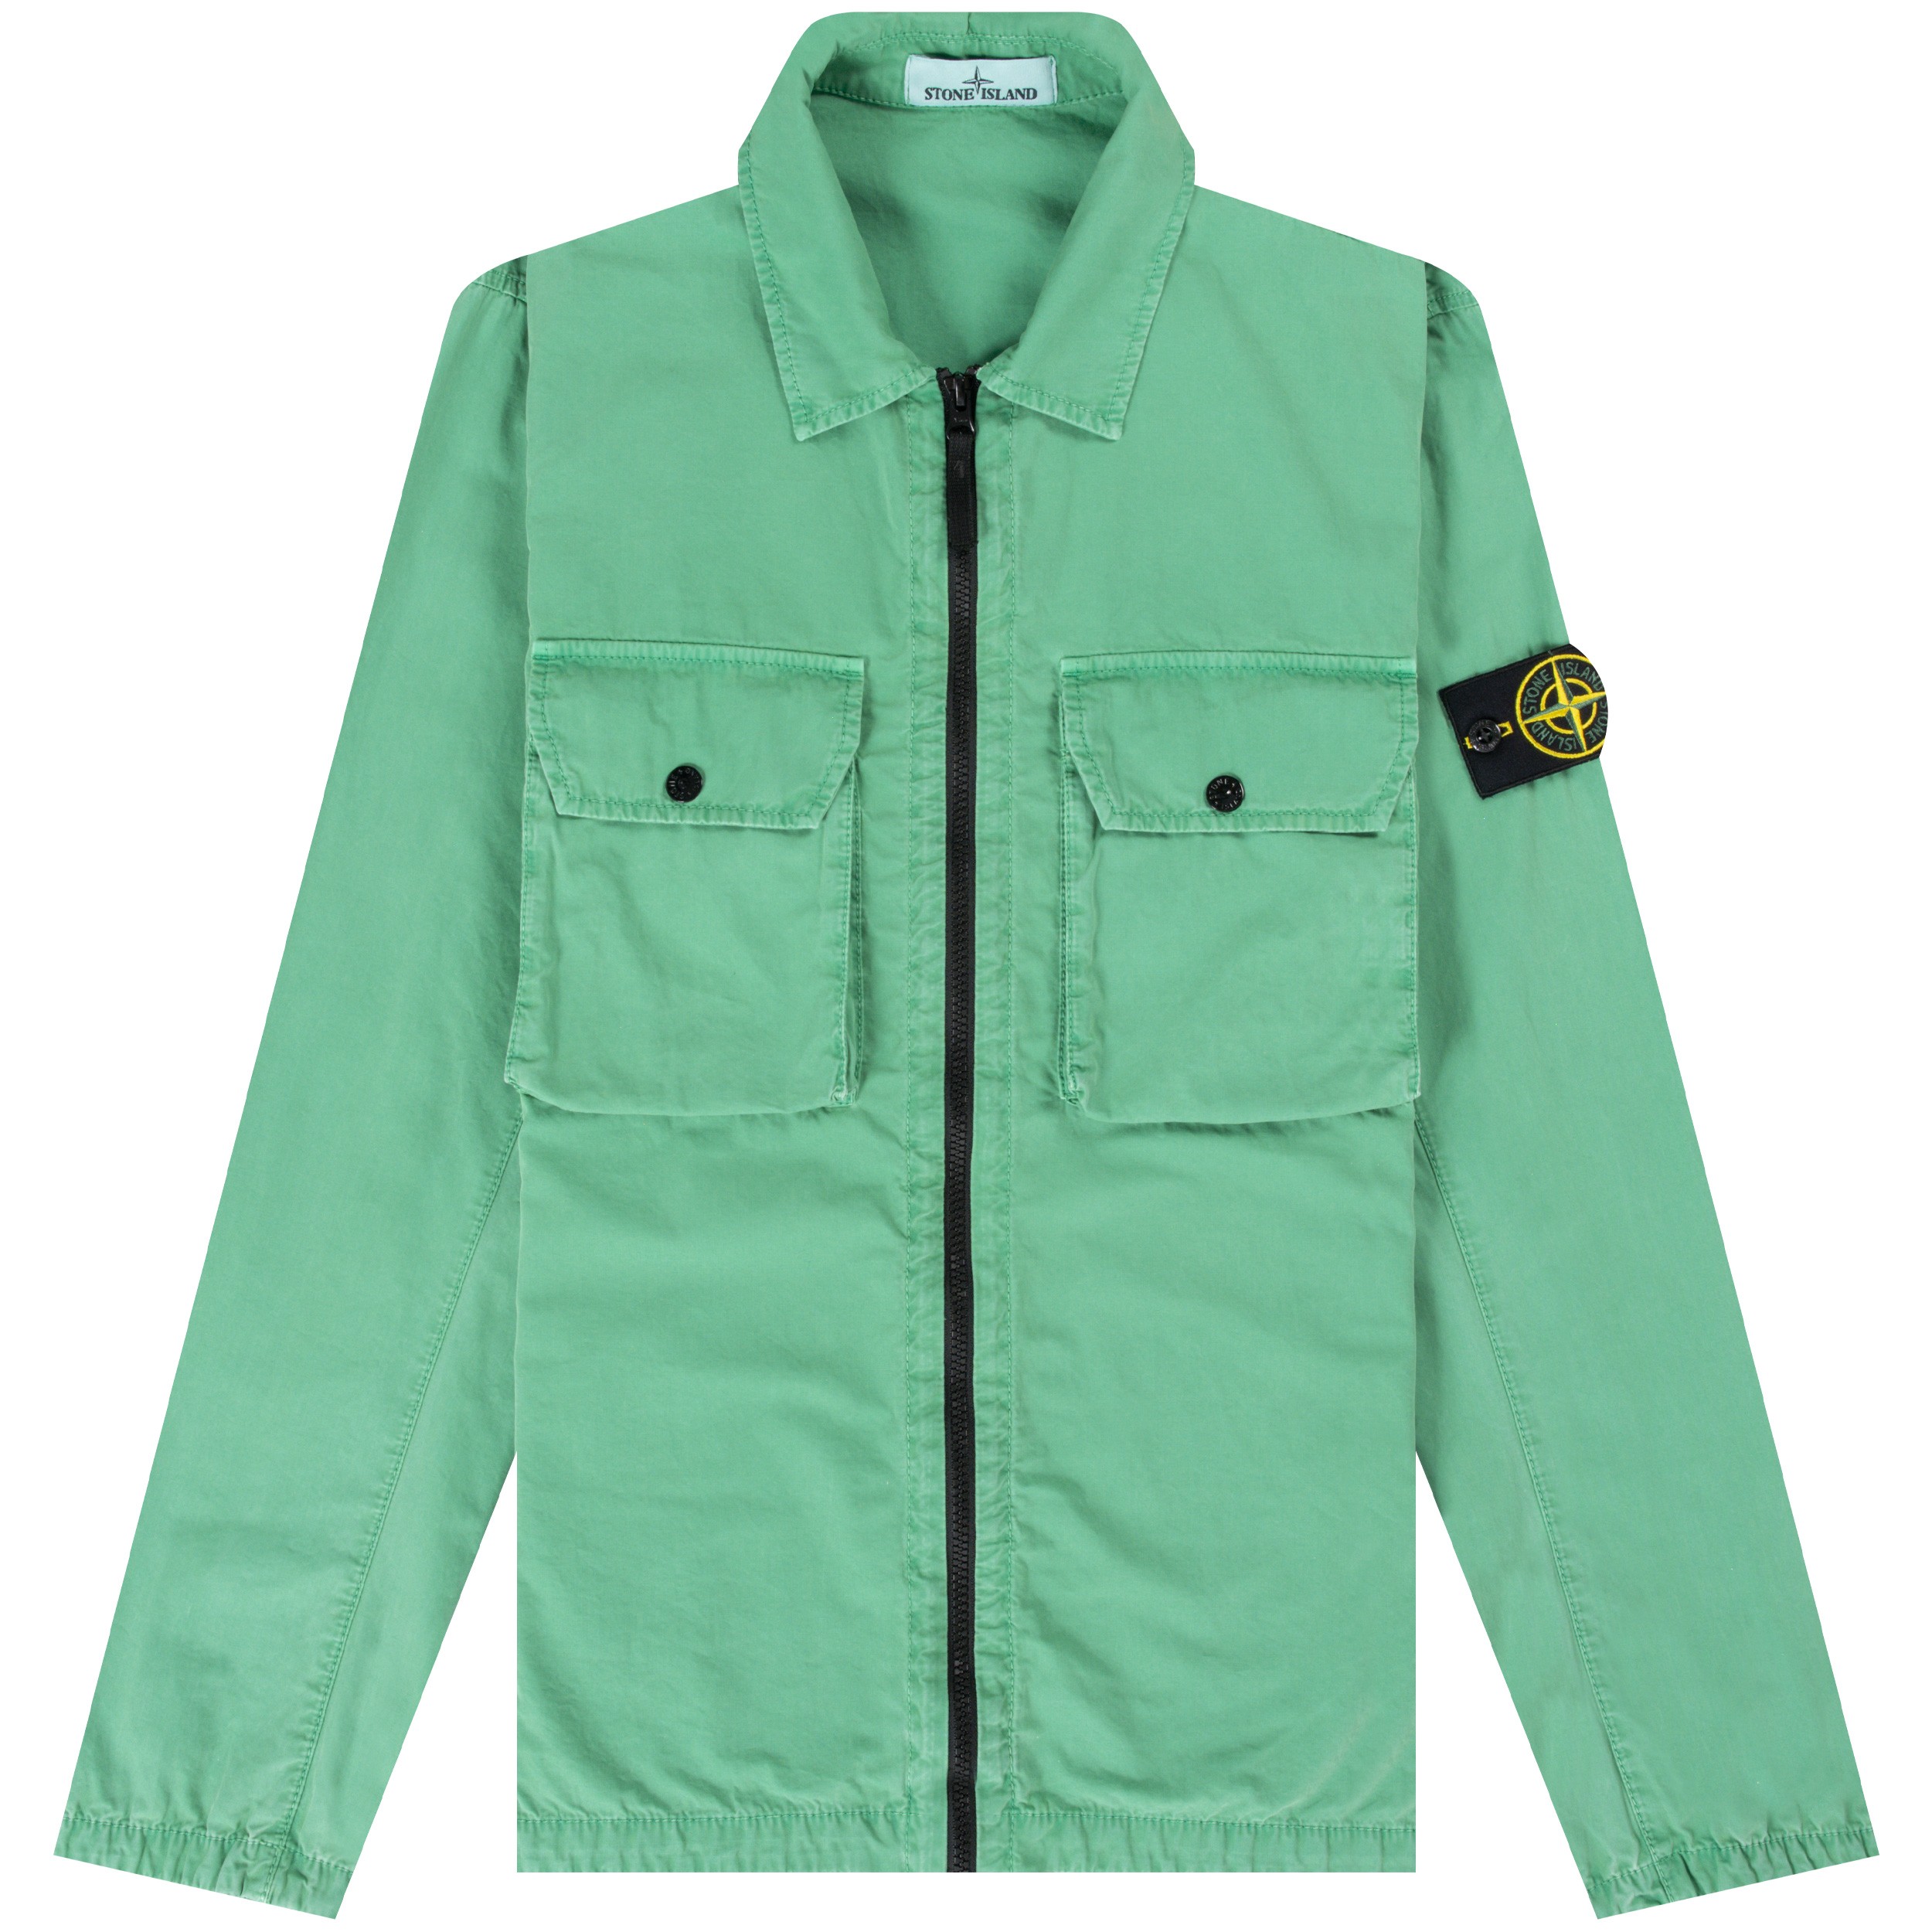 Stone Island 'Garment Dyed' Overshirt Double Pocket Bright Green